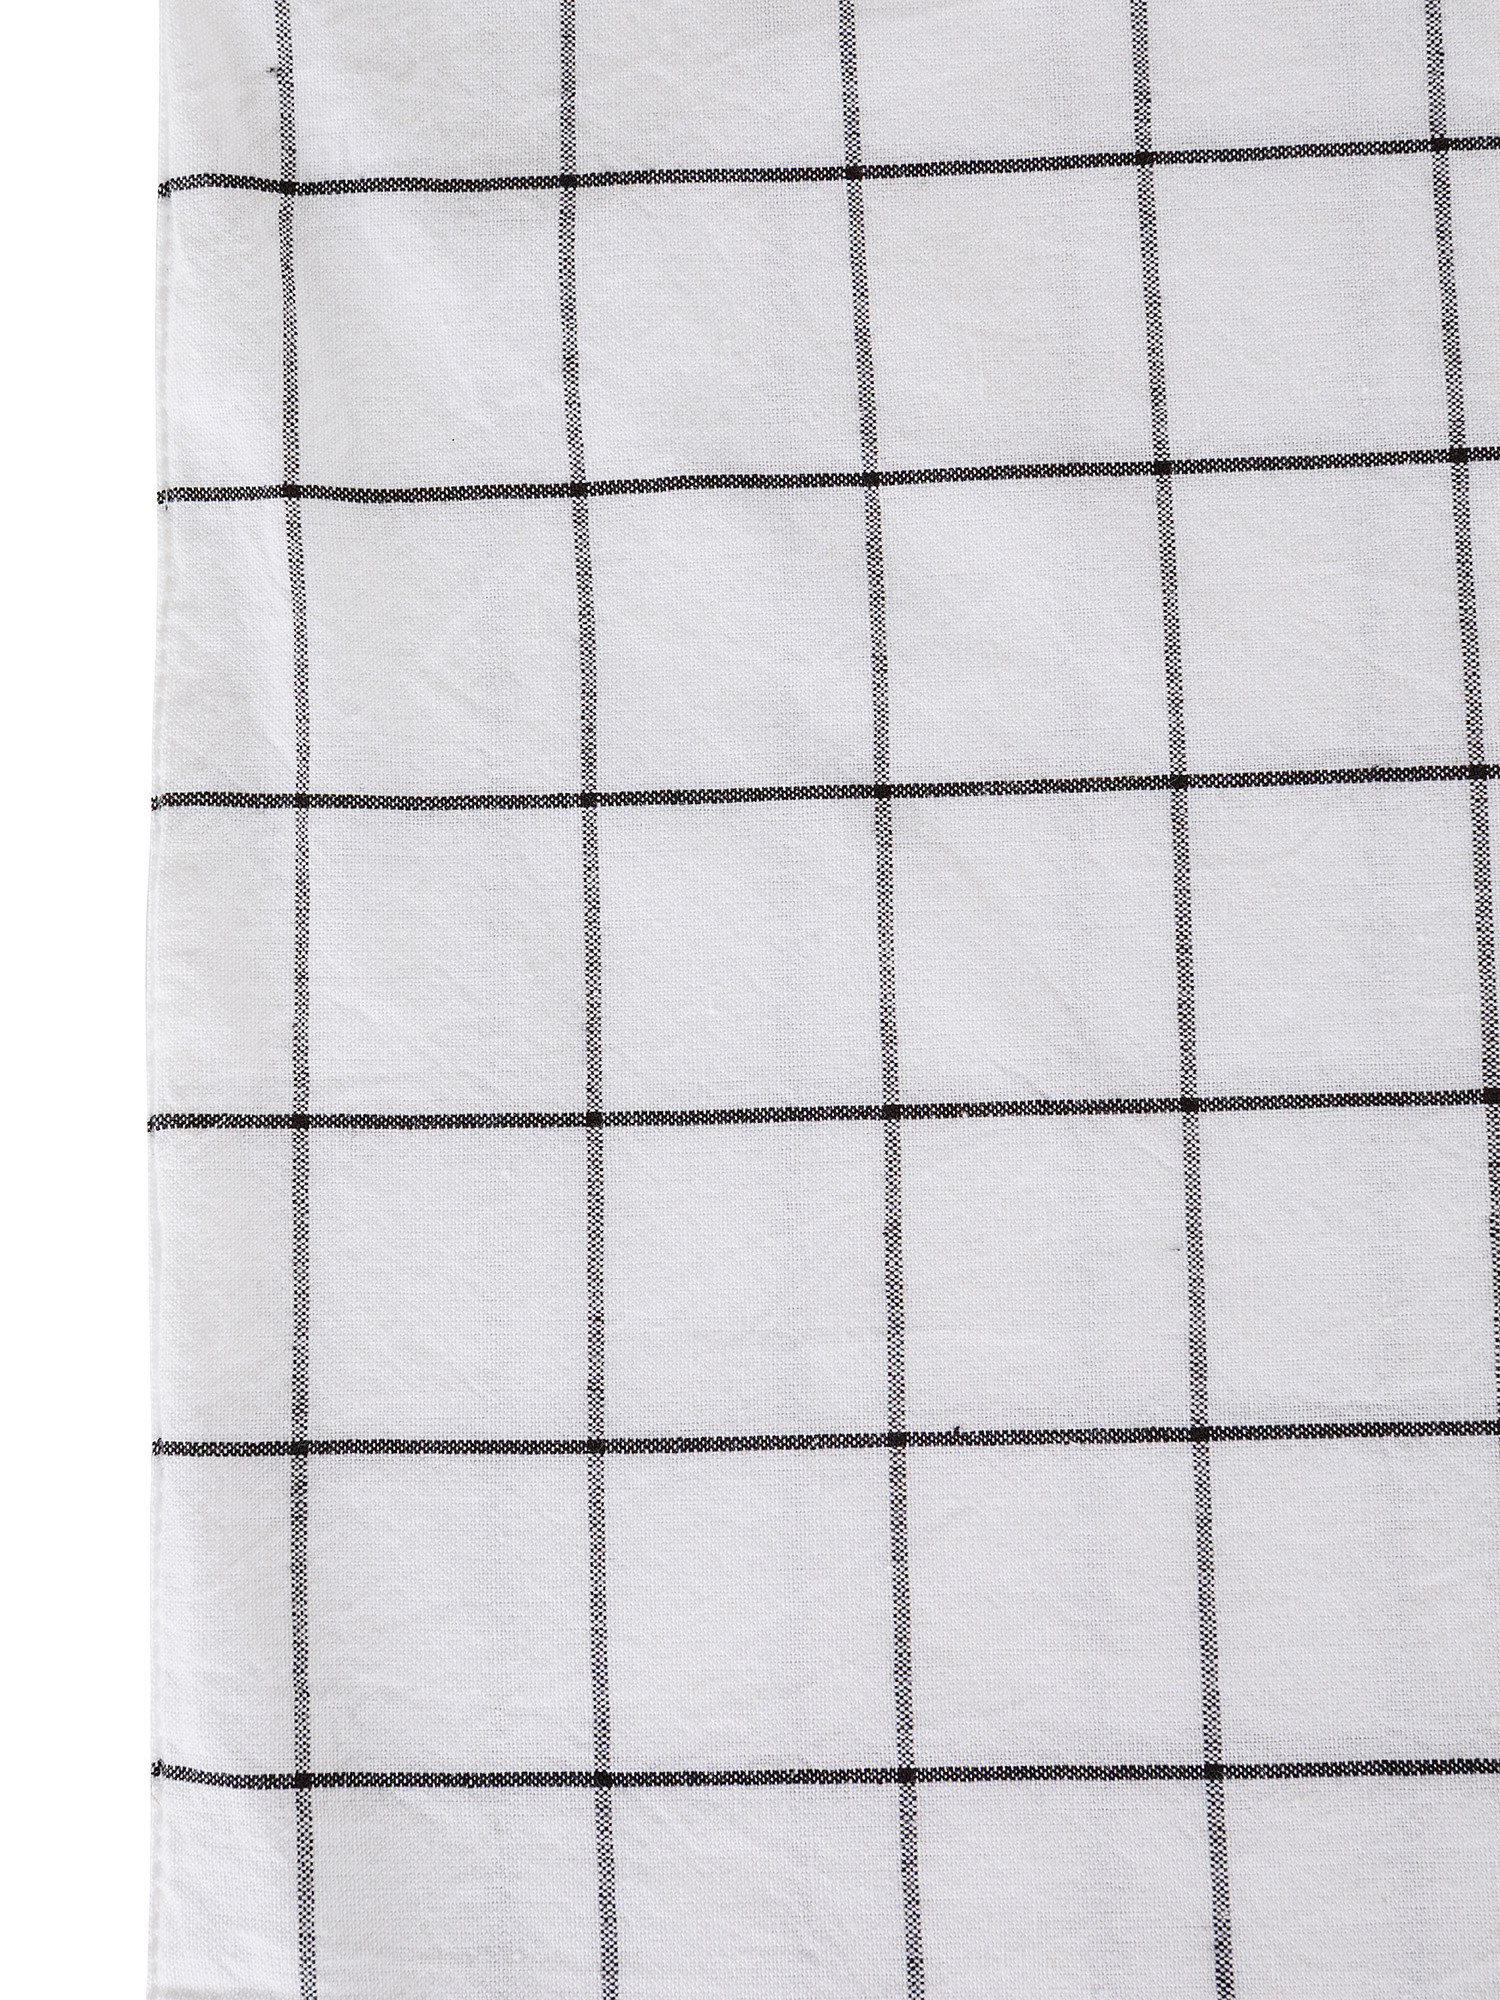 Runner cotone lavato motivo check, Bianco, large image number 1